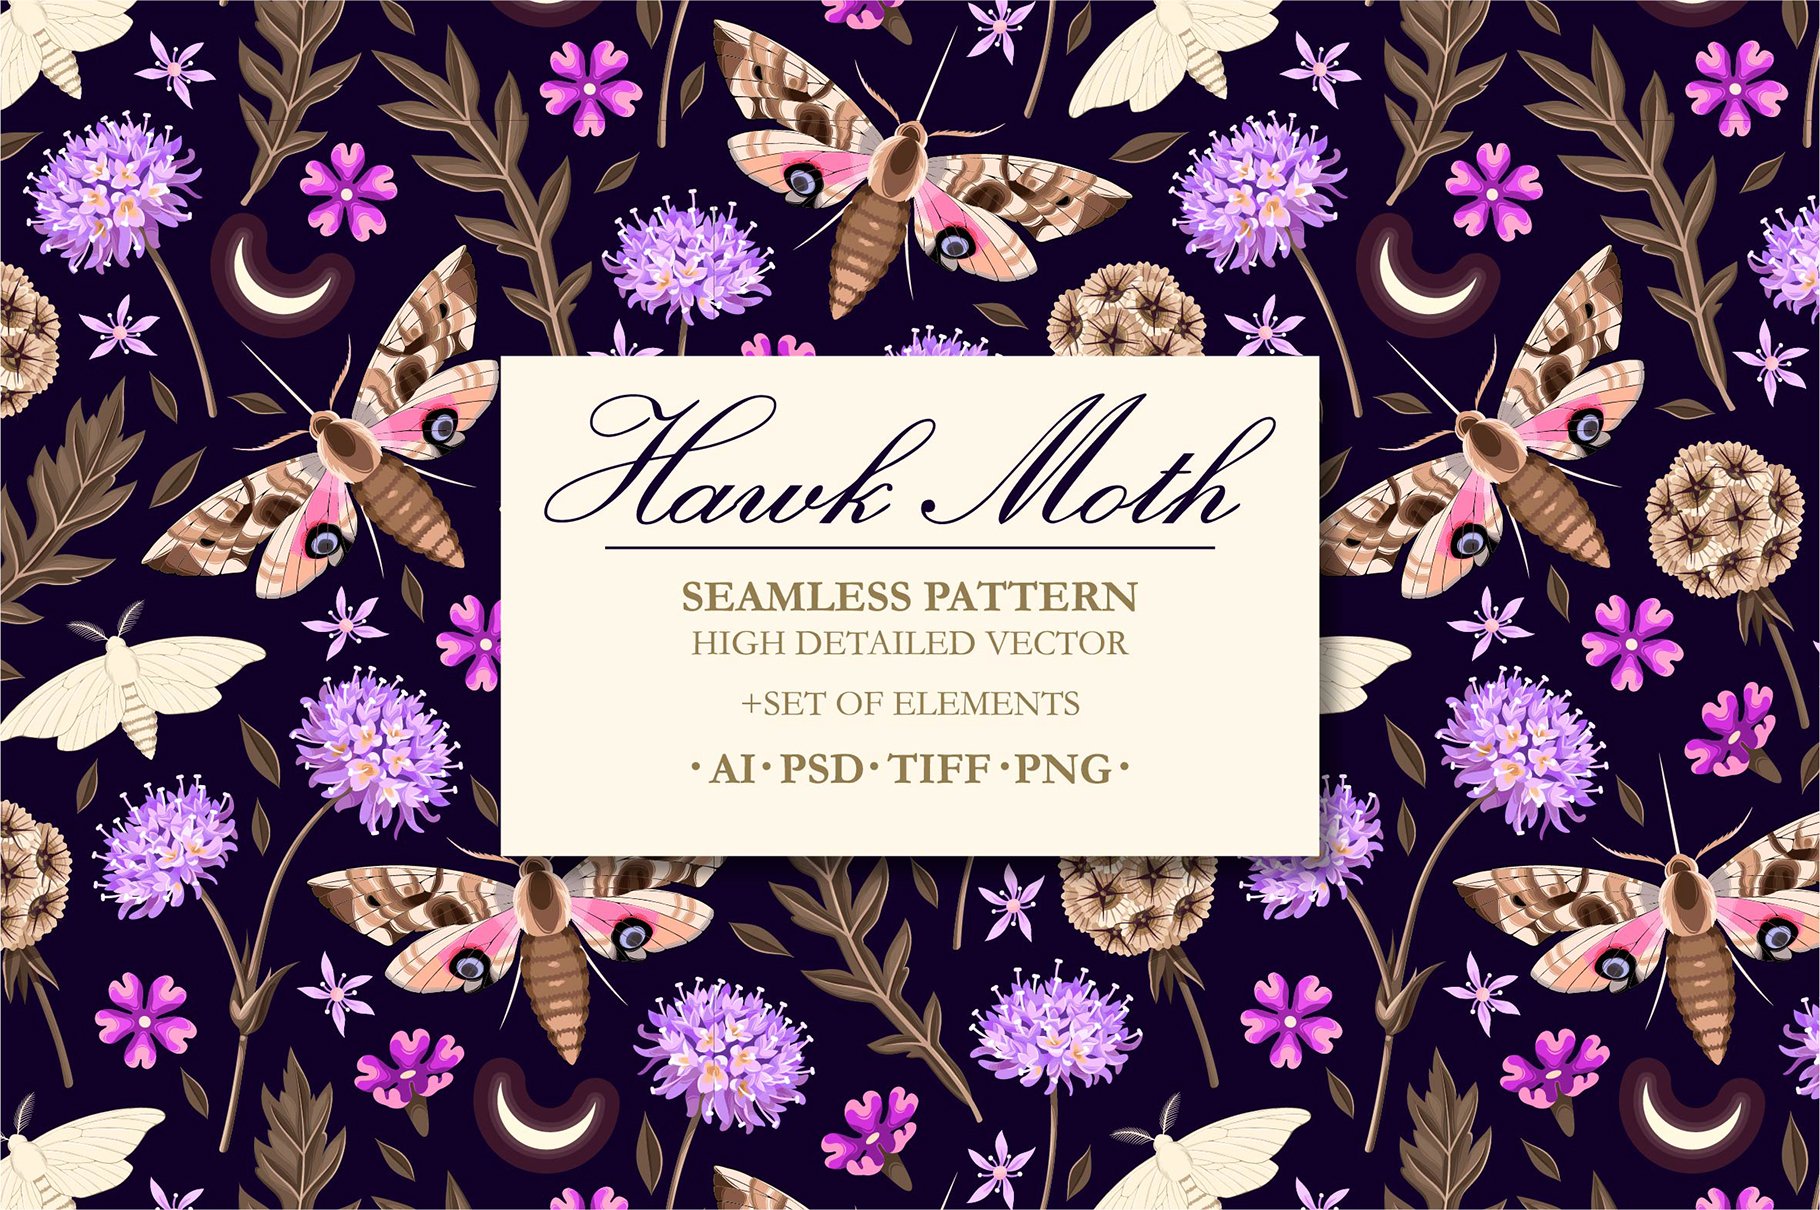 Hawk Moth Pattern cover image.